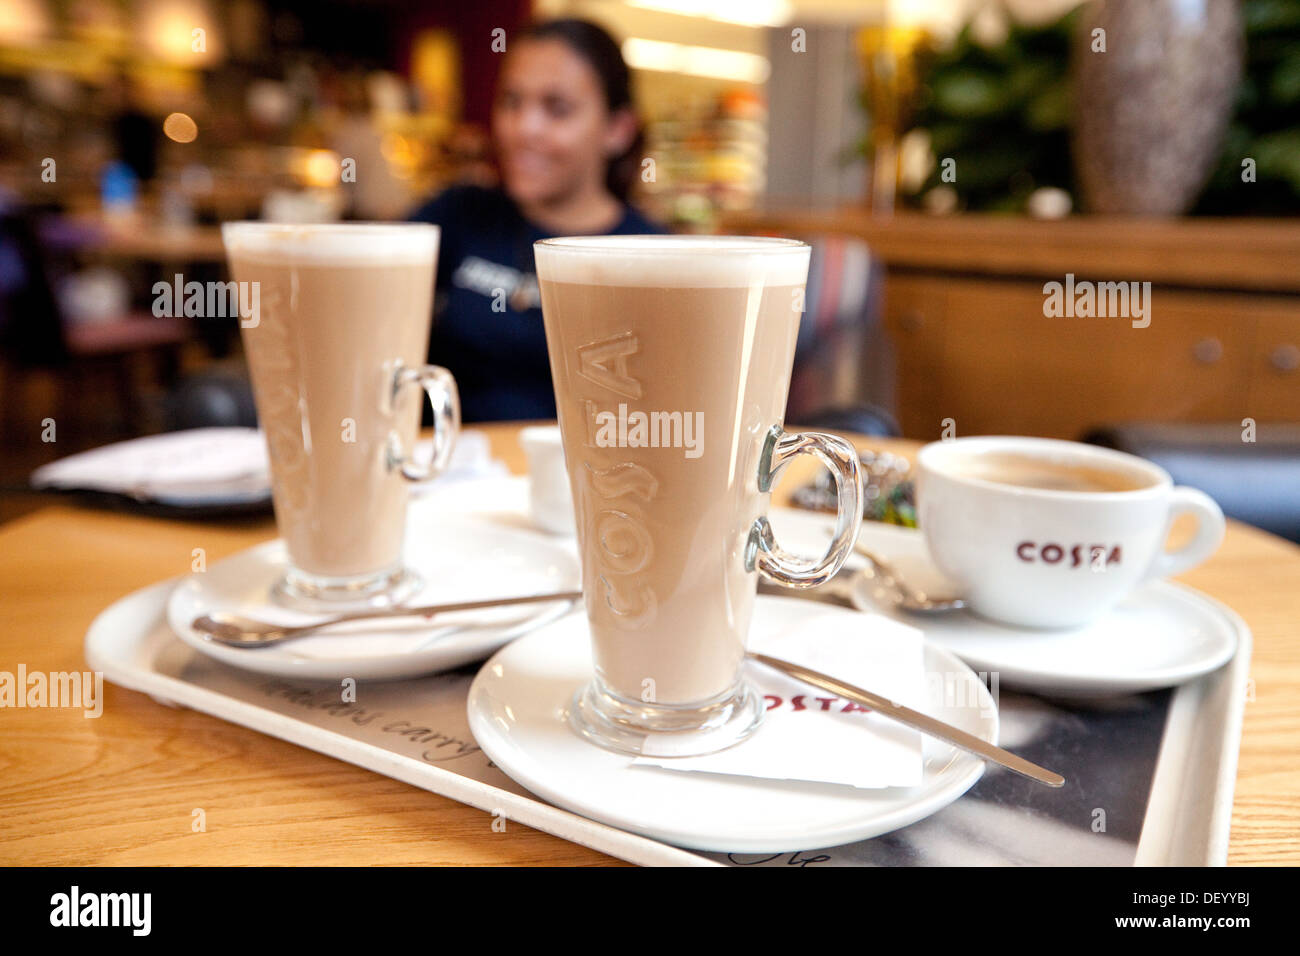 Costa Coffee, latte and americano coffees in a Costa Coffee coffee bar, Birmingham, UK Stock Photo